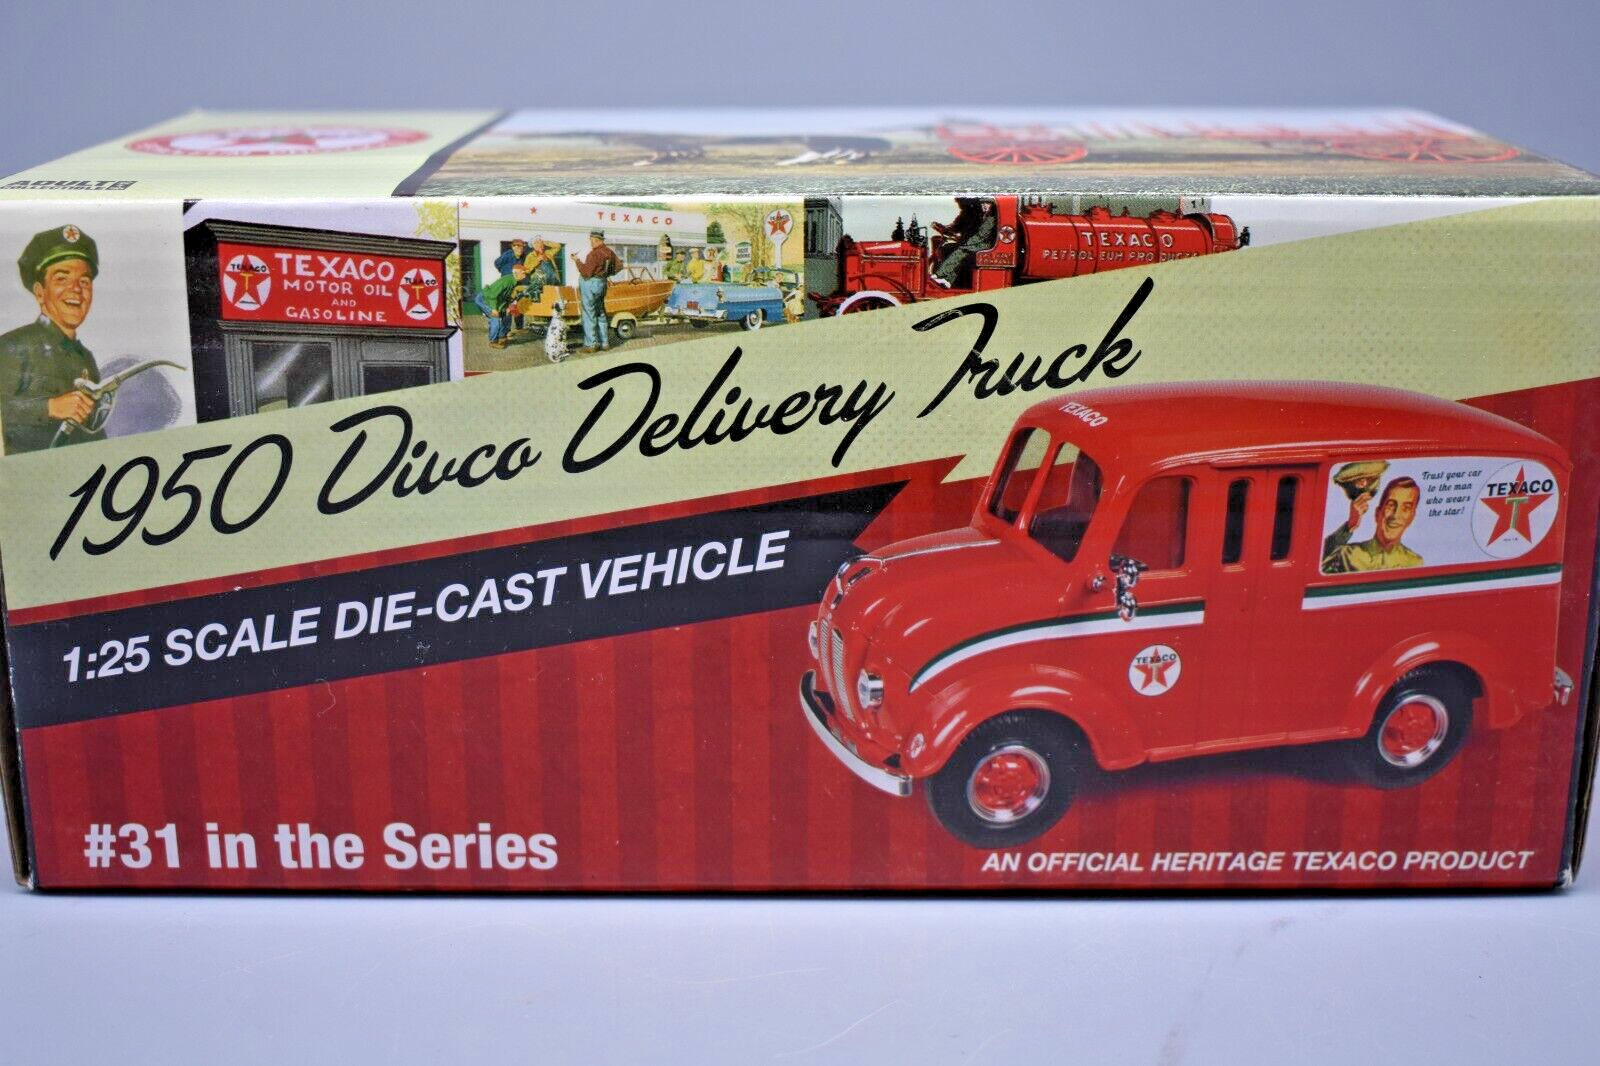 Texaco ERTL 1950 Divco Delivery Truck, 1:25 scale Diecast, #31 in Series, NIB